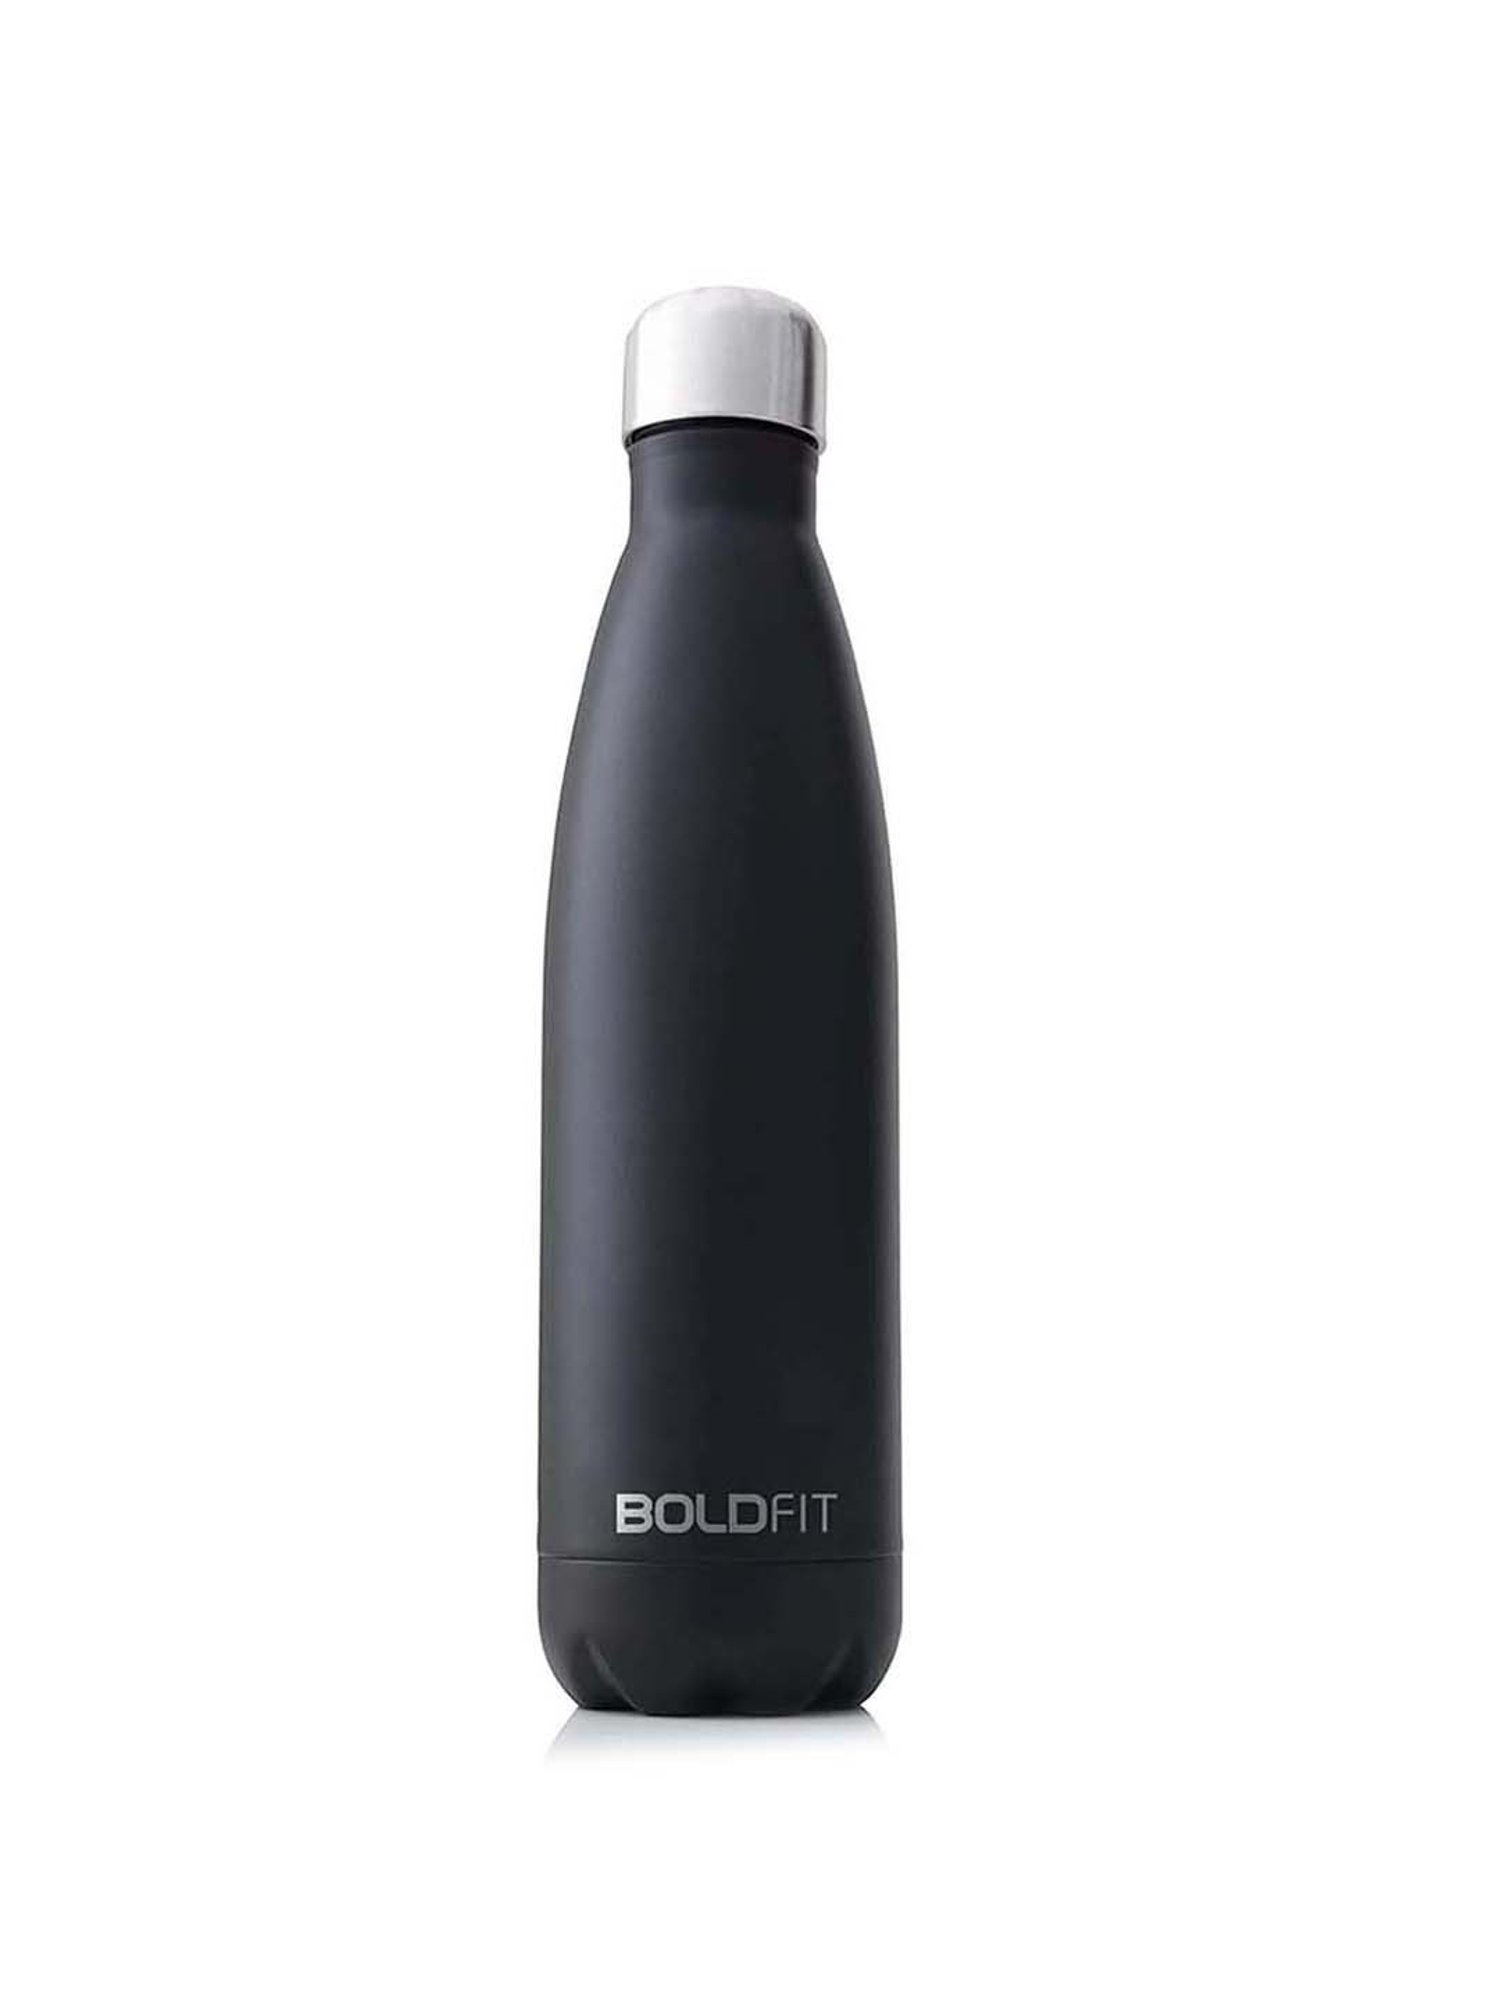 Boldfit Water Bottles Stainless Steel Water Bottle 1 Litre Steel Water  Bottles for School, Office, H…See more Boldfit Water Bottles Stainless  Steel